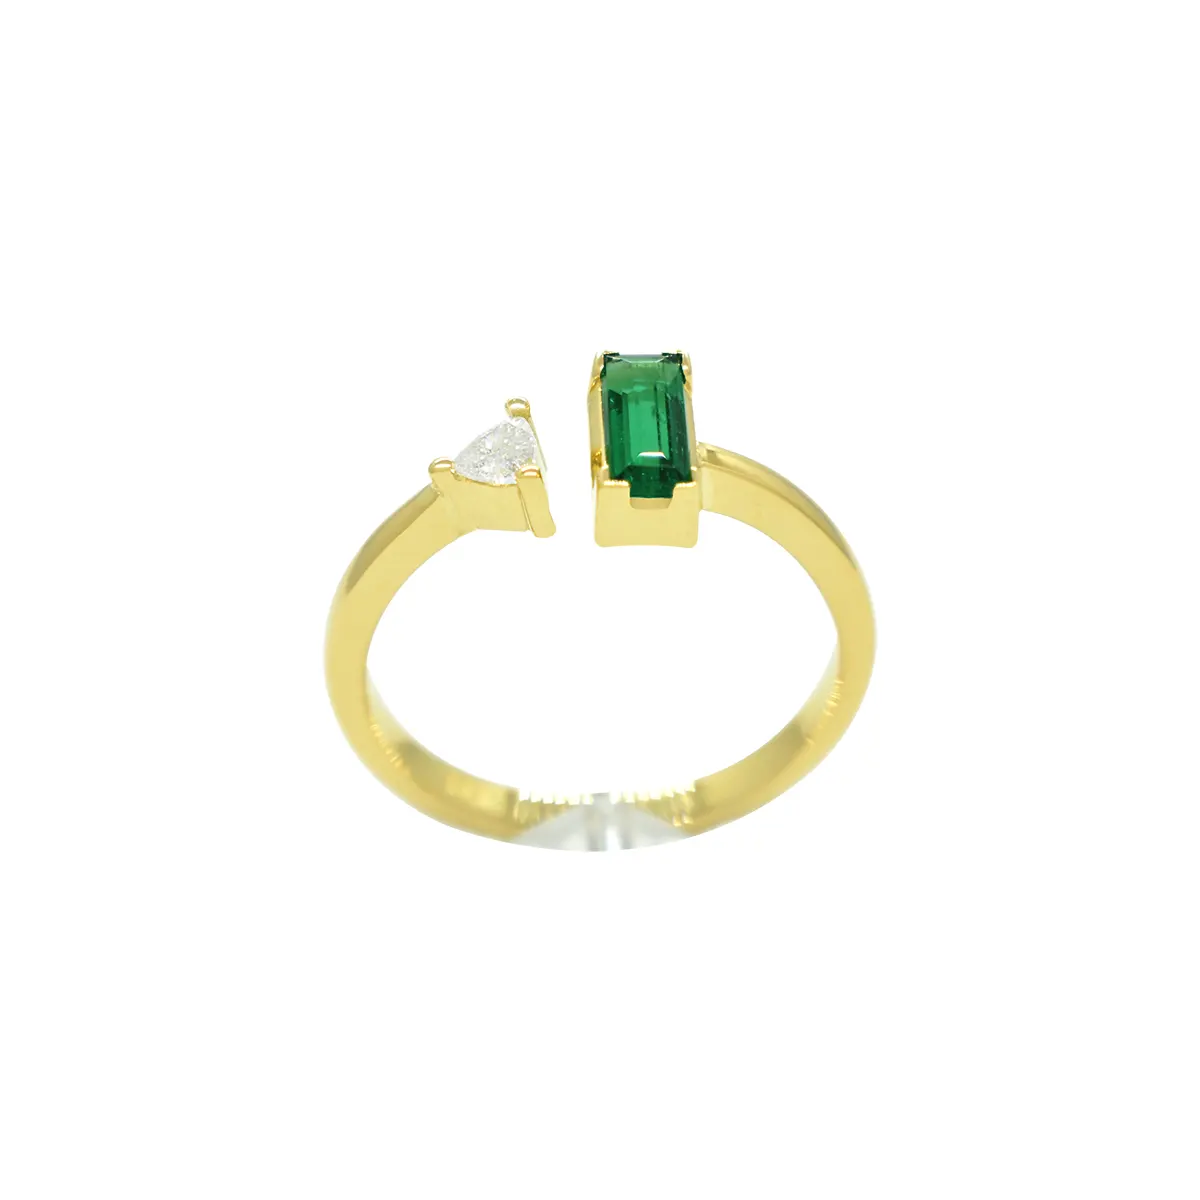 emerald-and-diamond-cuff-ring-in-18k-yellow-gold